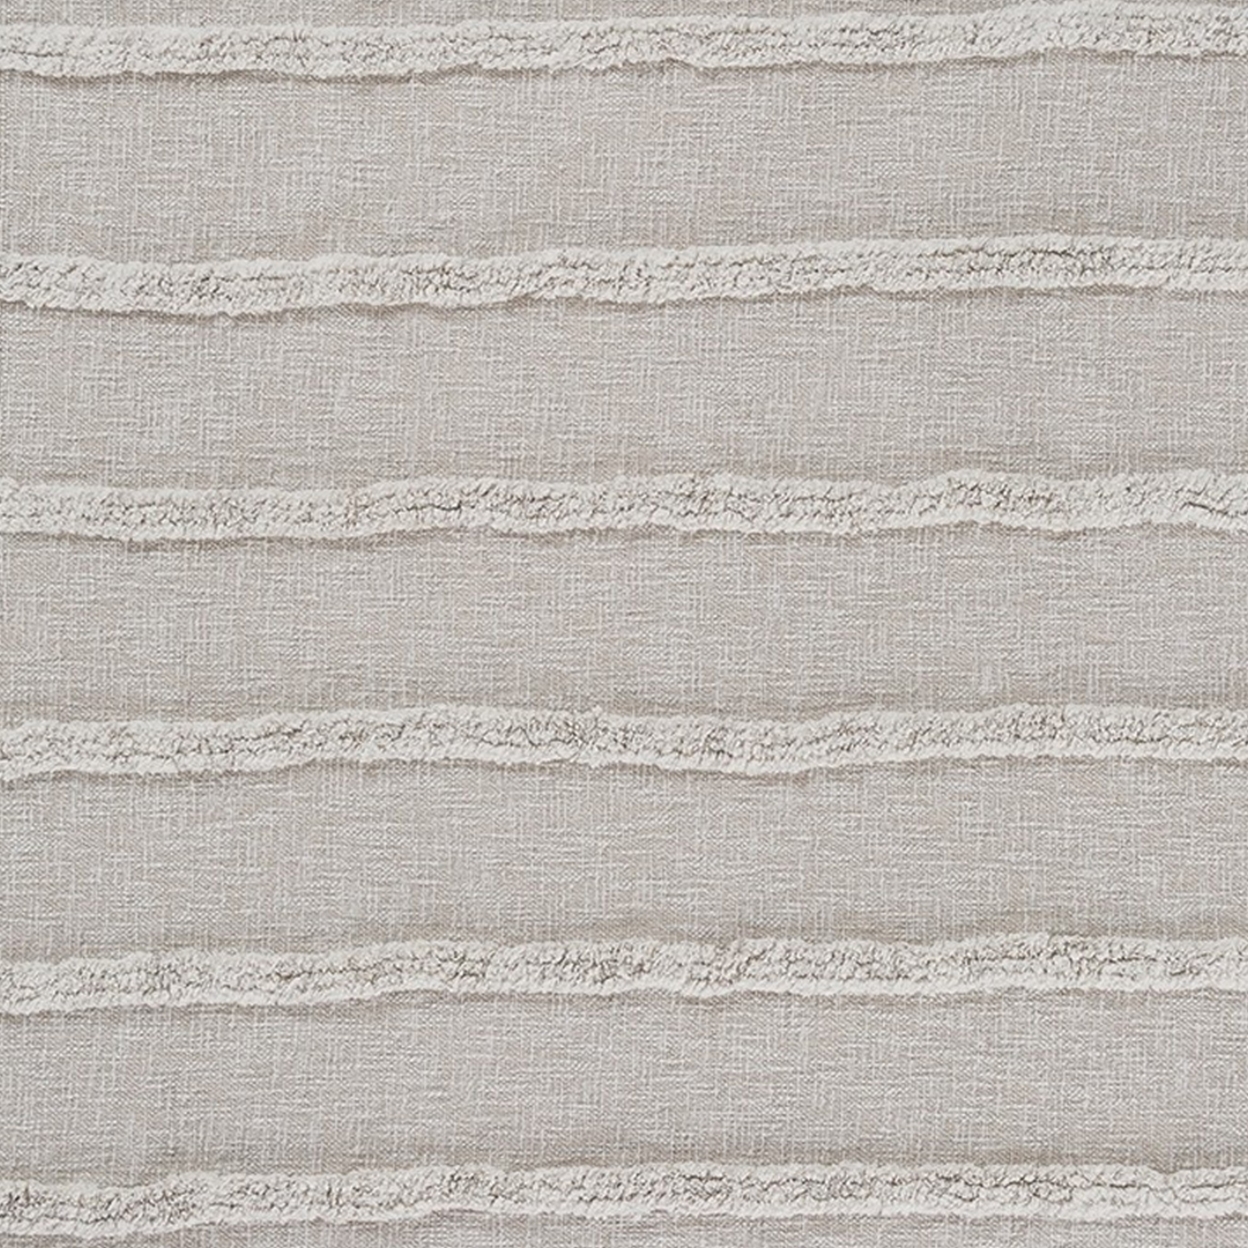 60 Inch Modern Soft Cotton Throw Blanket, Stonewashed Stripe Design, Gray- Saltoro Sherpi